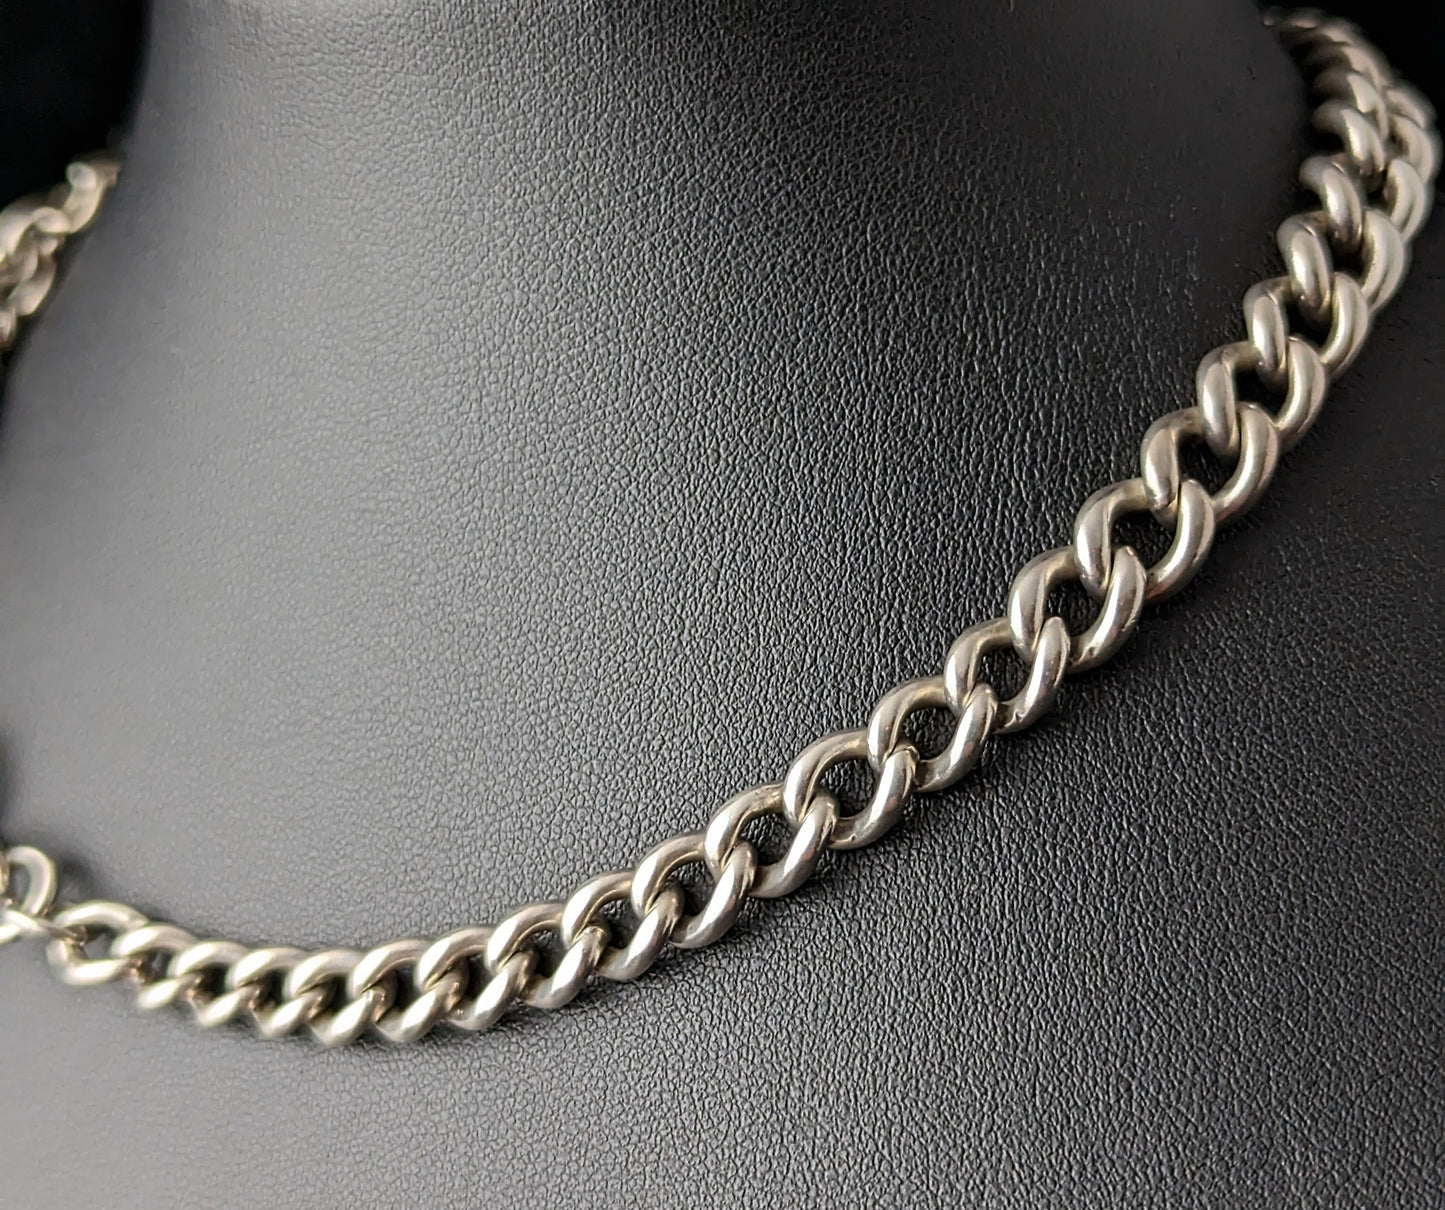 Antique sterling silver Albert chain, tassel, watch chain fob